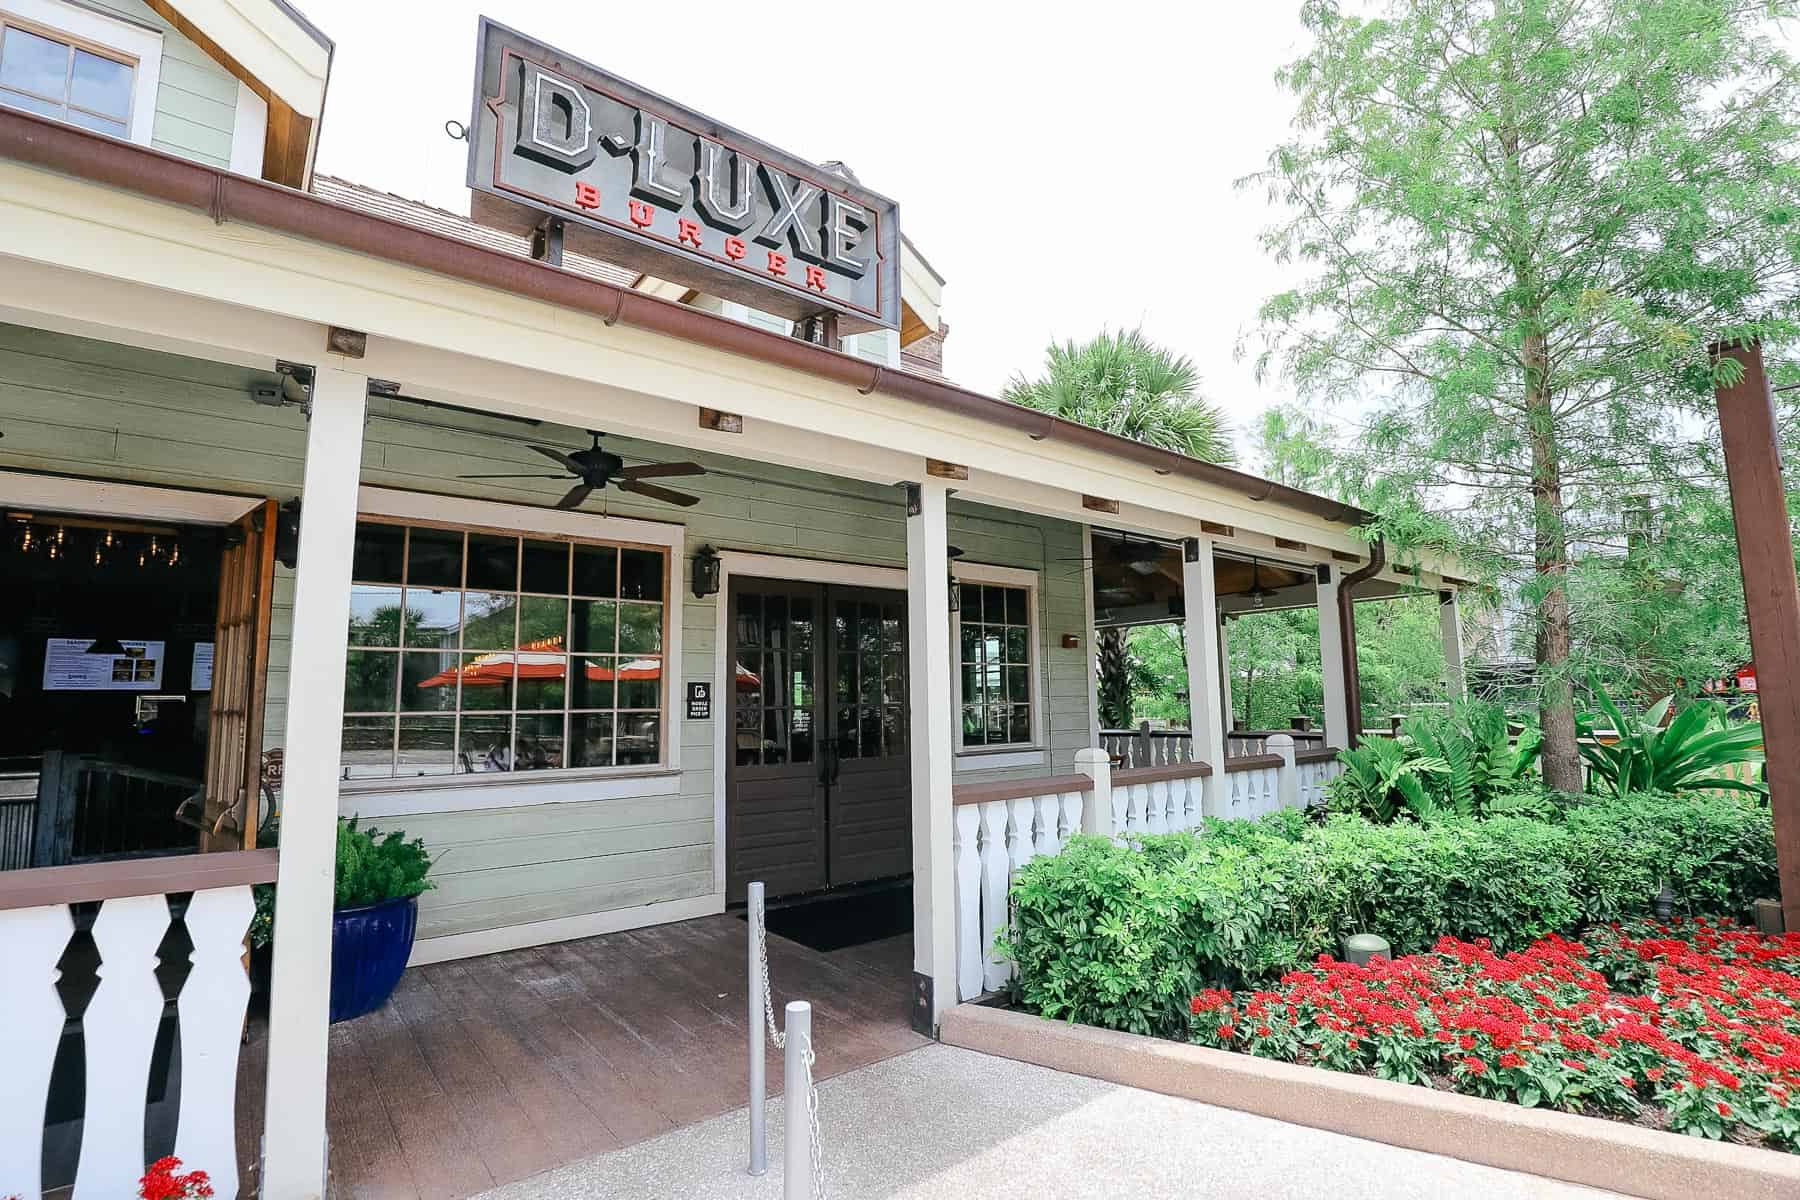 D-Luxe Burger entrance at Disney Springs 